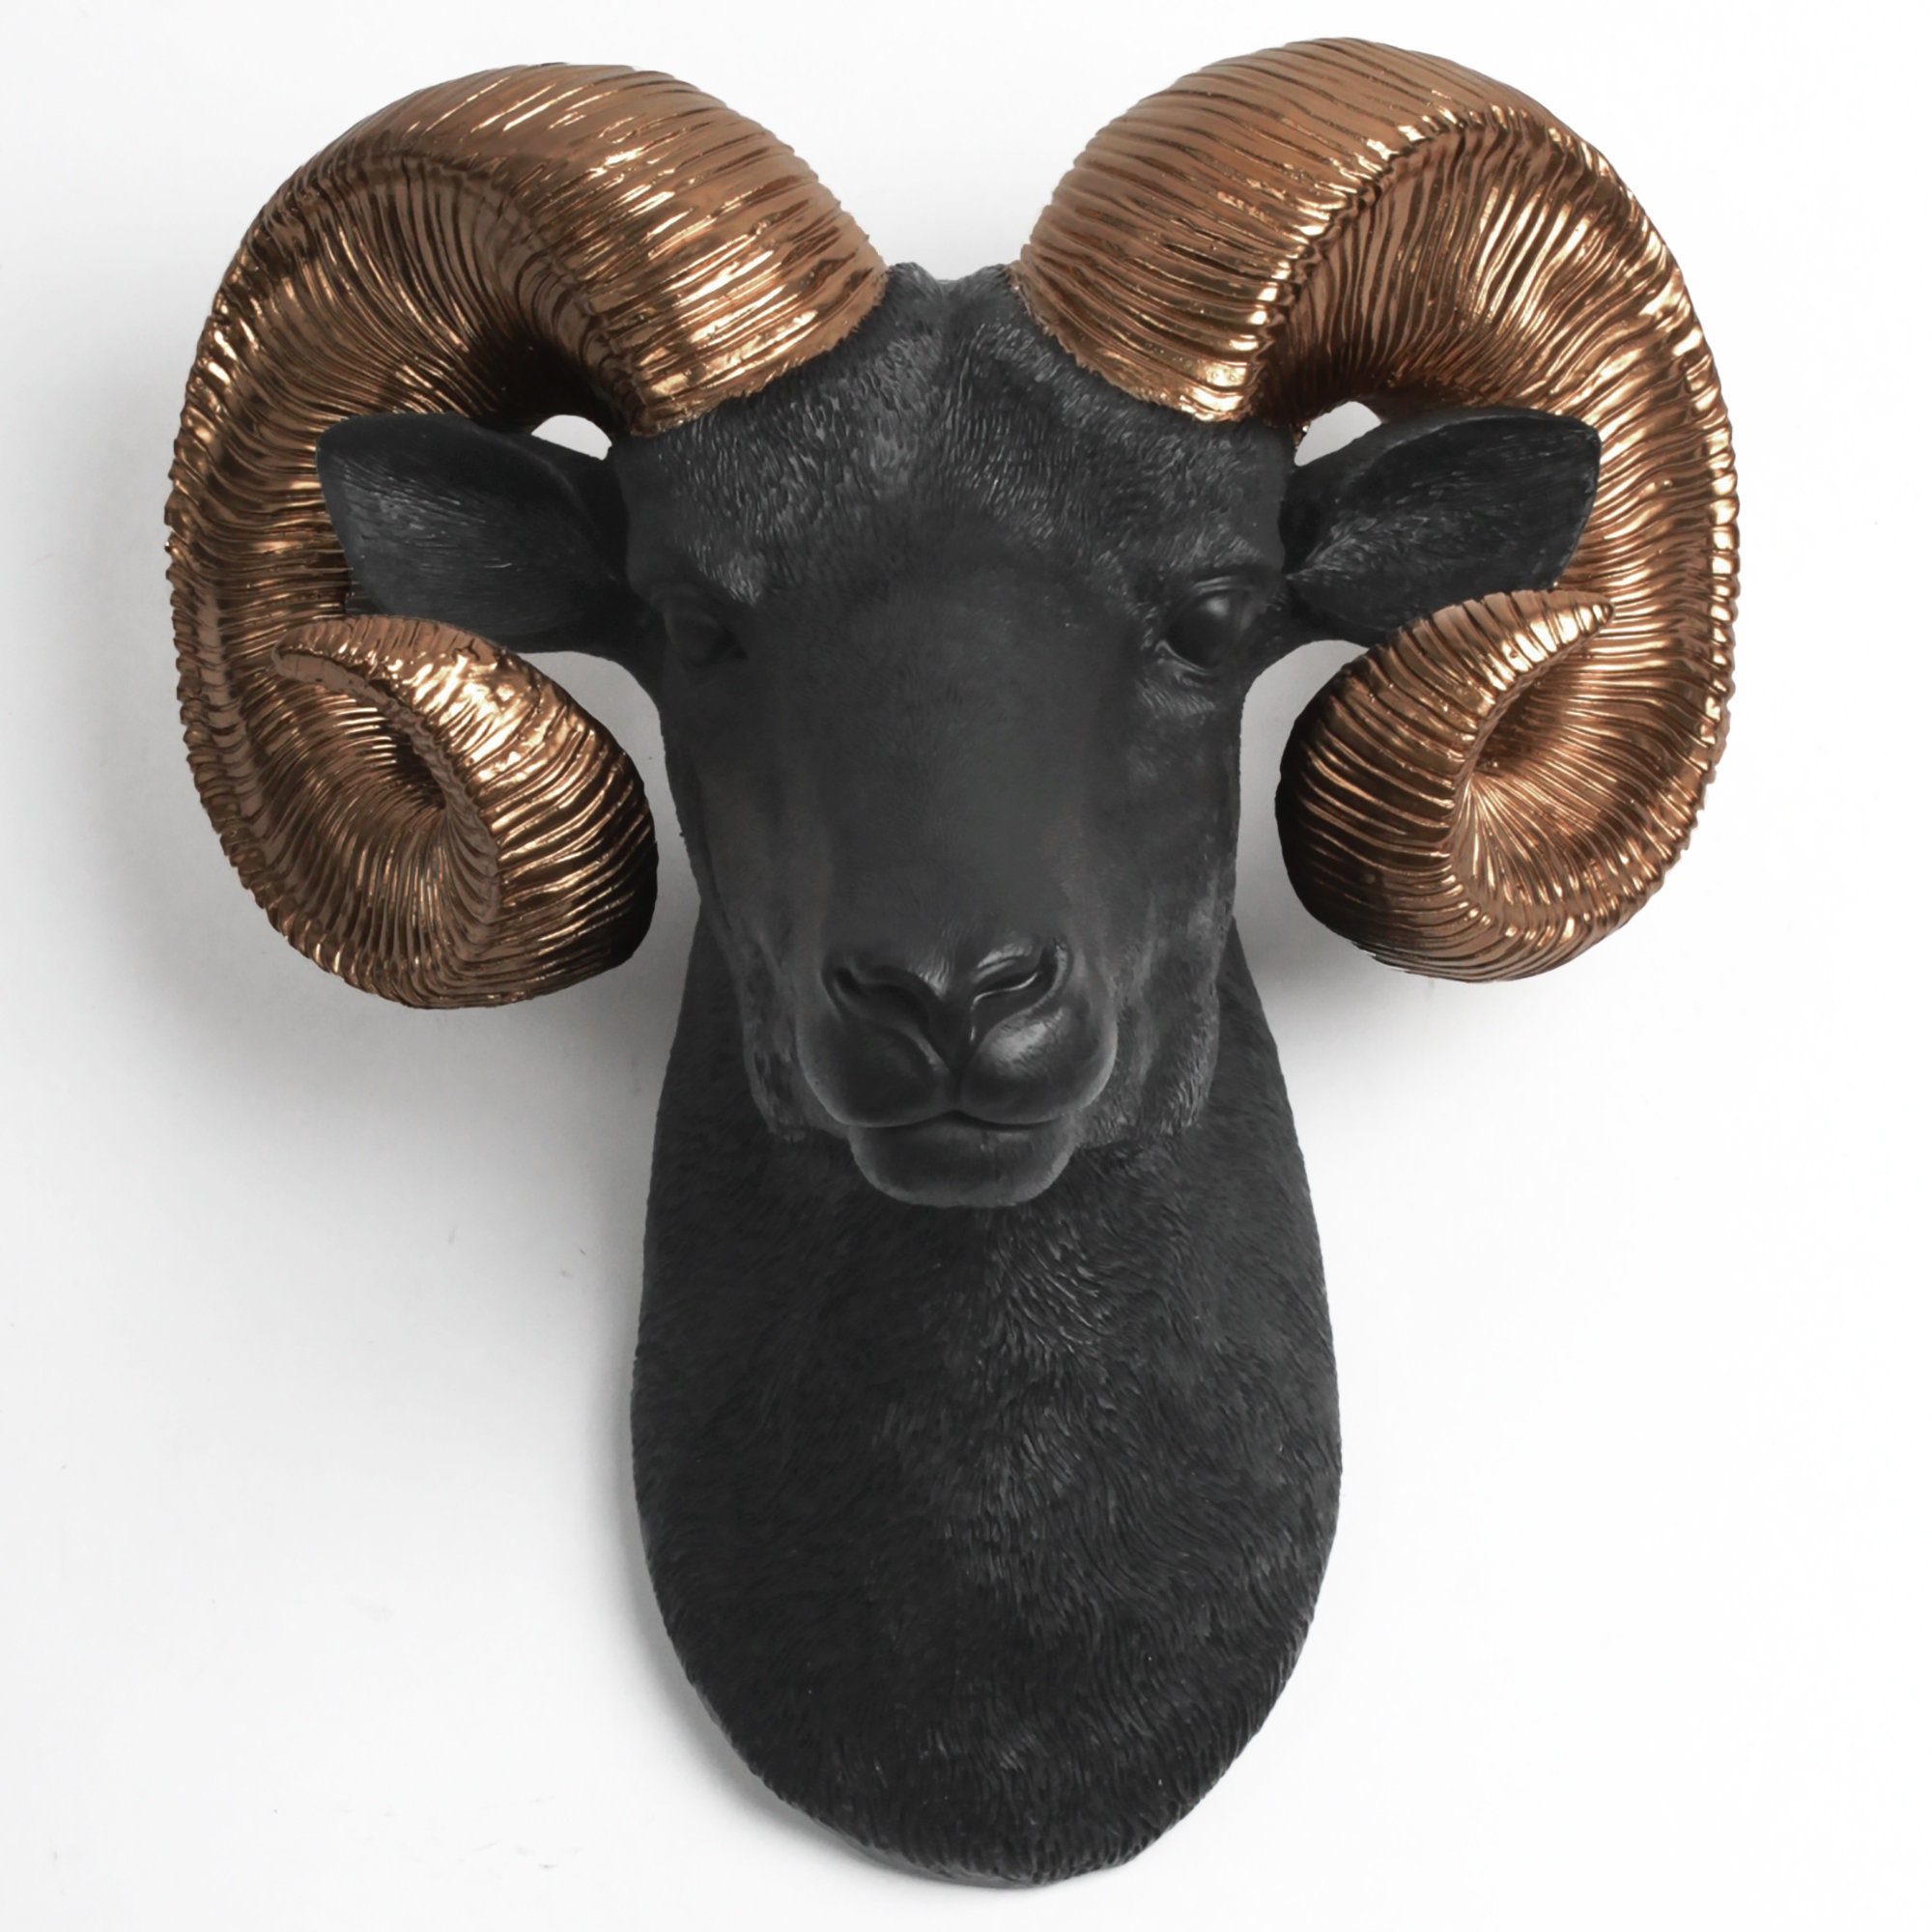 xl Black Ram Head Wall Mount with Bronze Horns - The Darby Rustic Bighorn Sheep/Ram, Modern Farmhouse Home Decor By White Faux Taxidermy